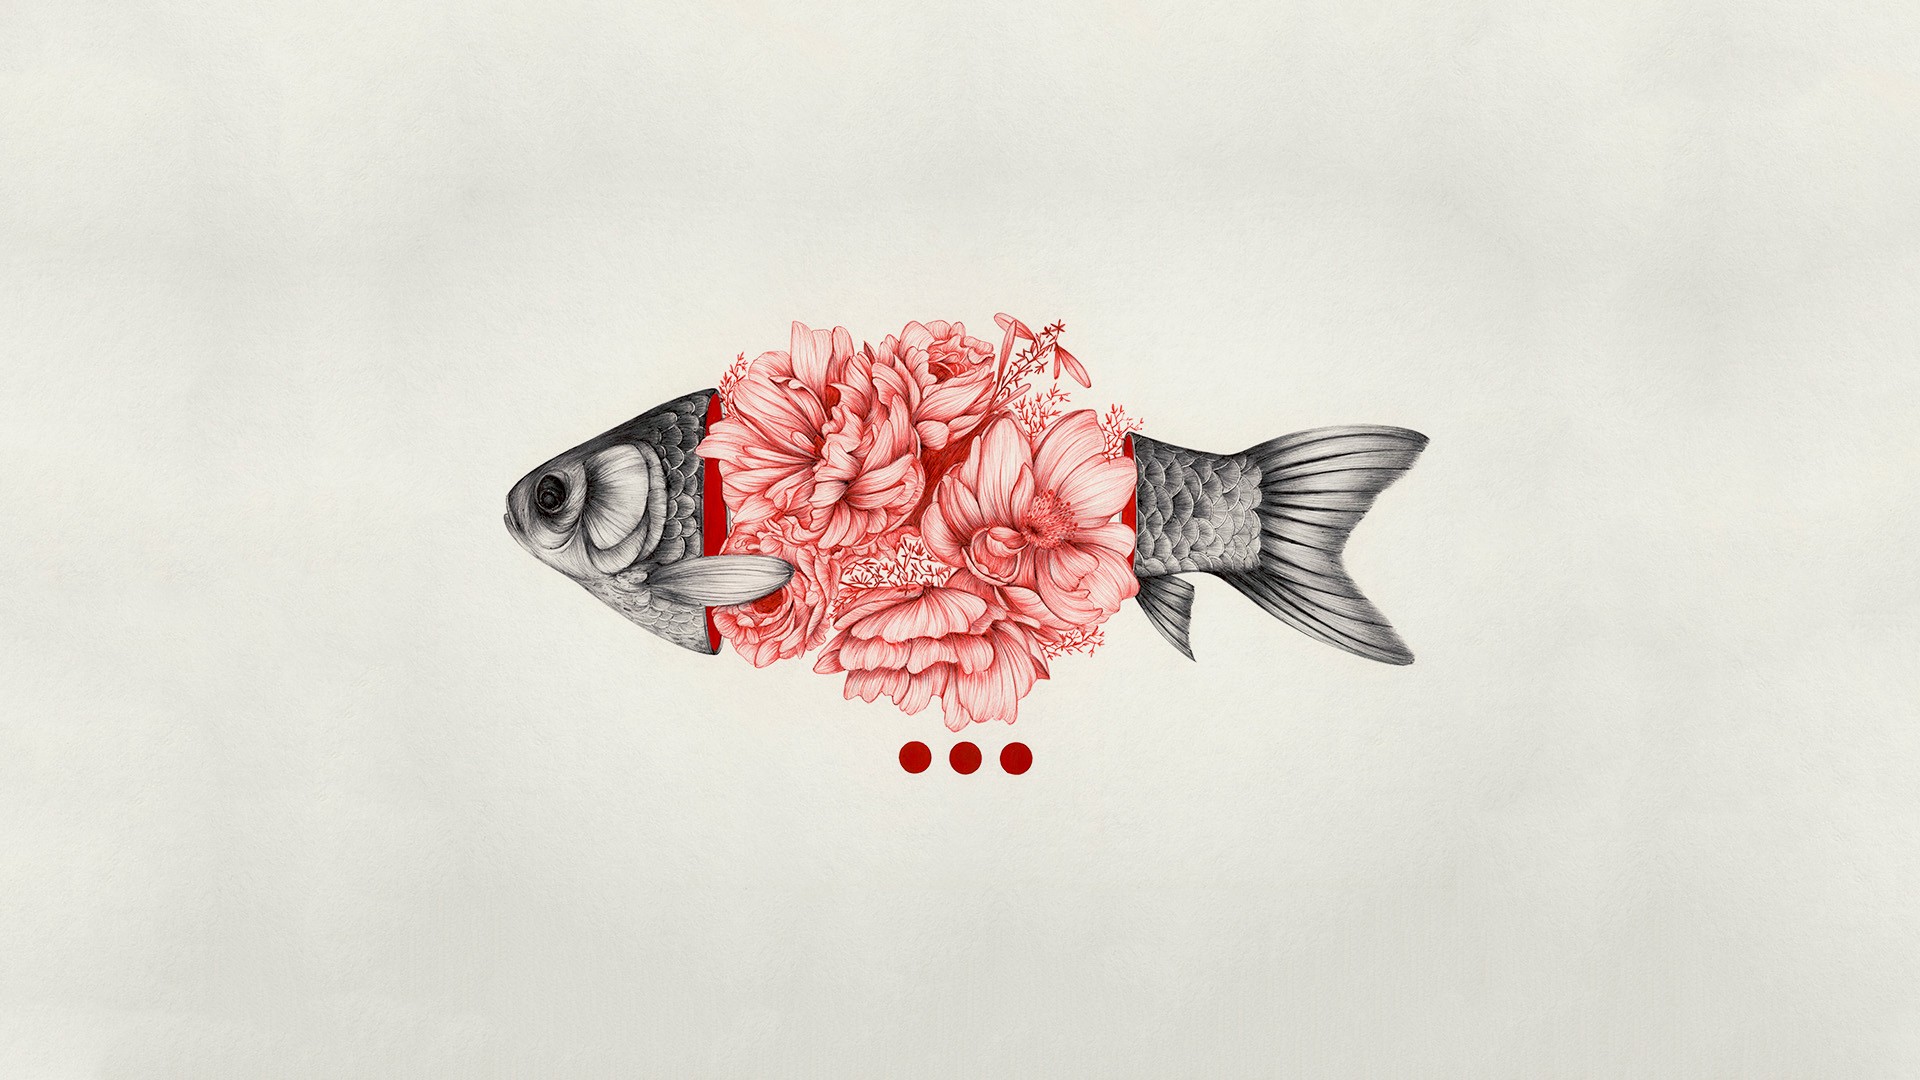 General 1920x1080 digital art minimalism simple background fish flowers dots artwork petals animals